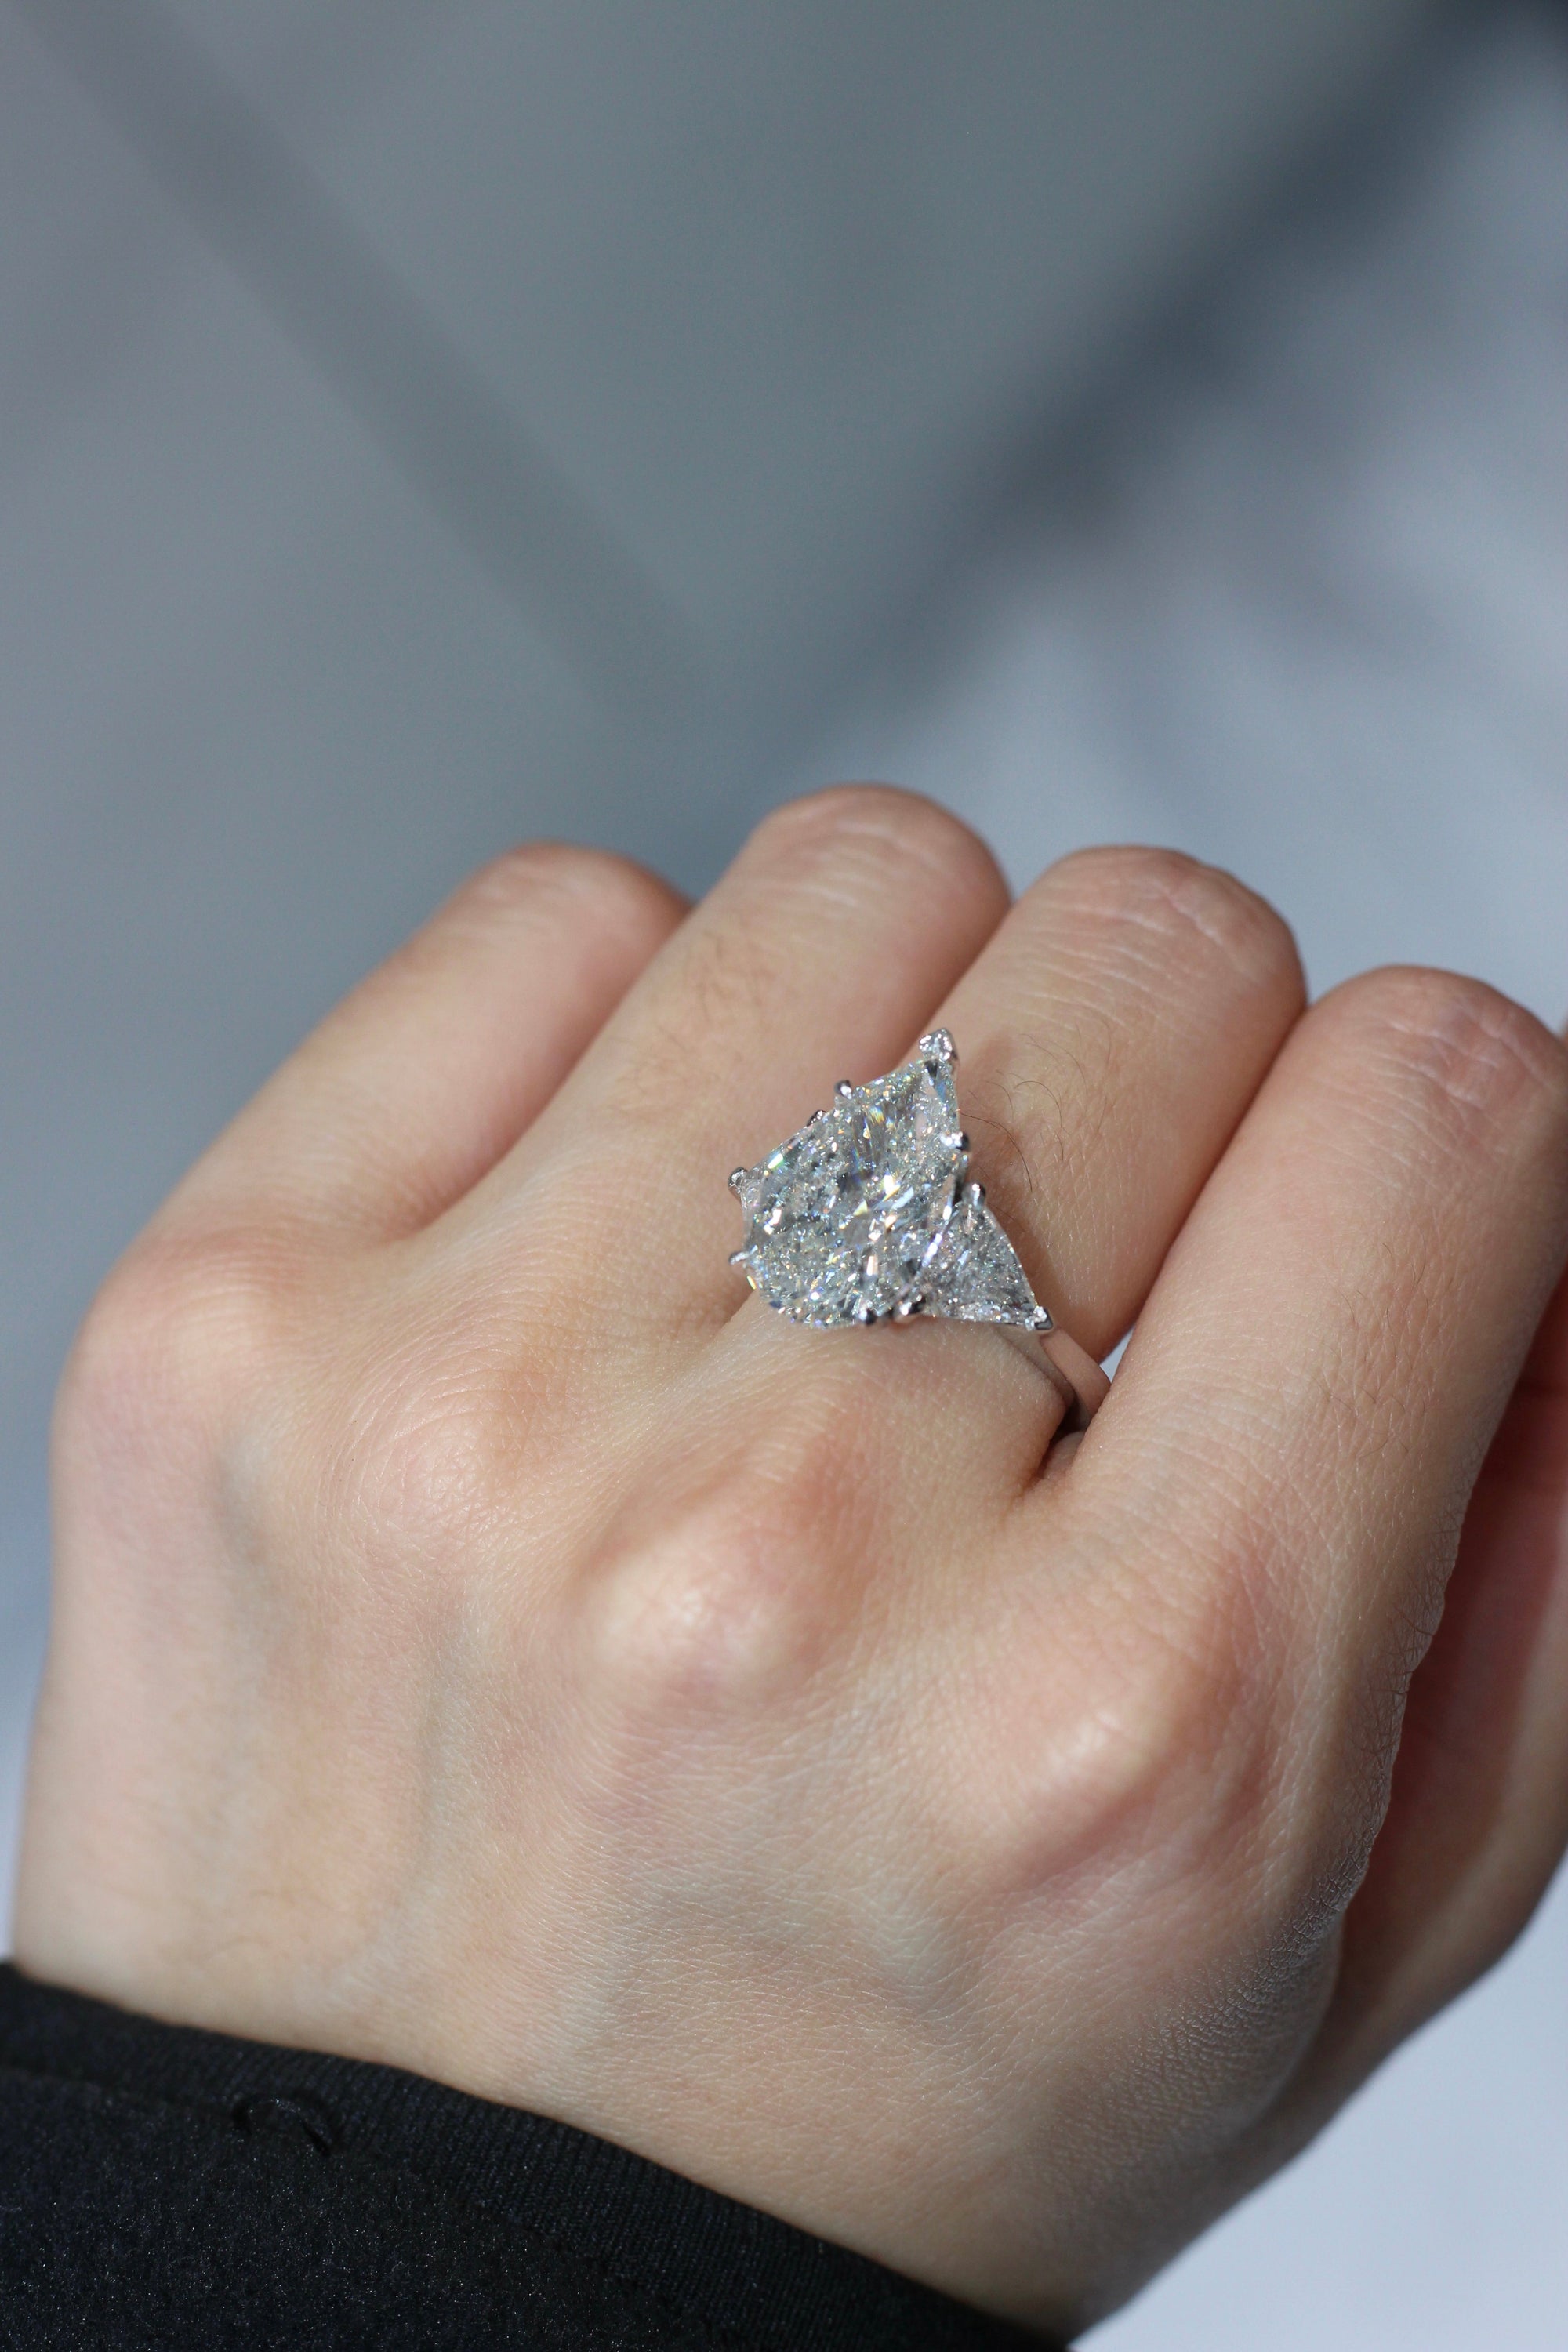 7 carat pear shaped diamond engagement ring